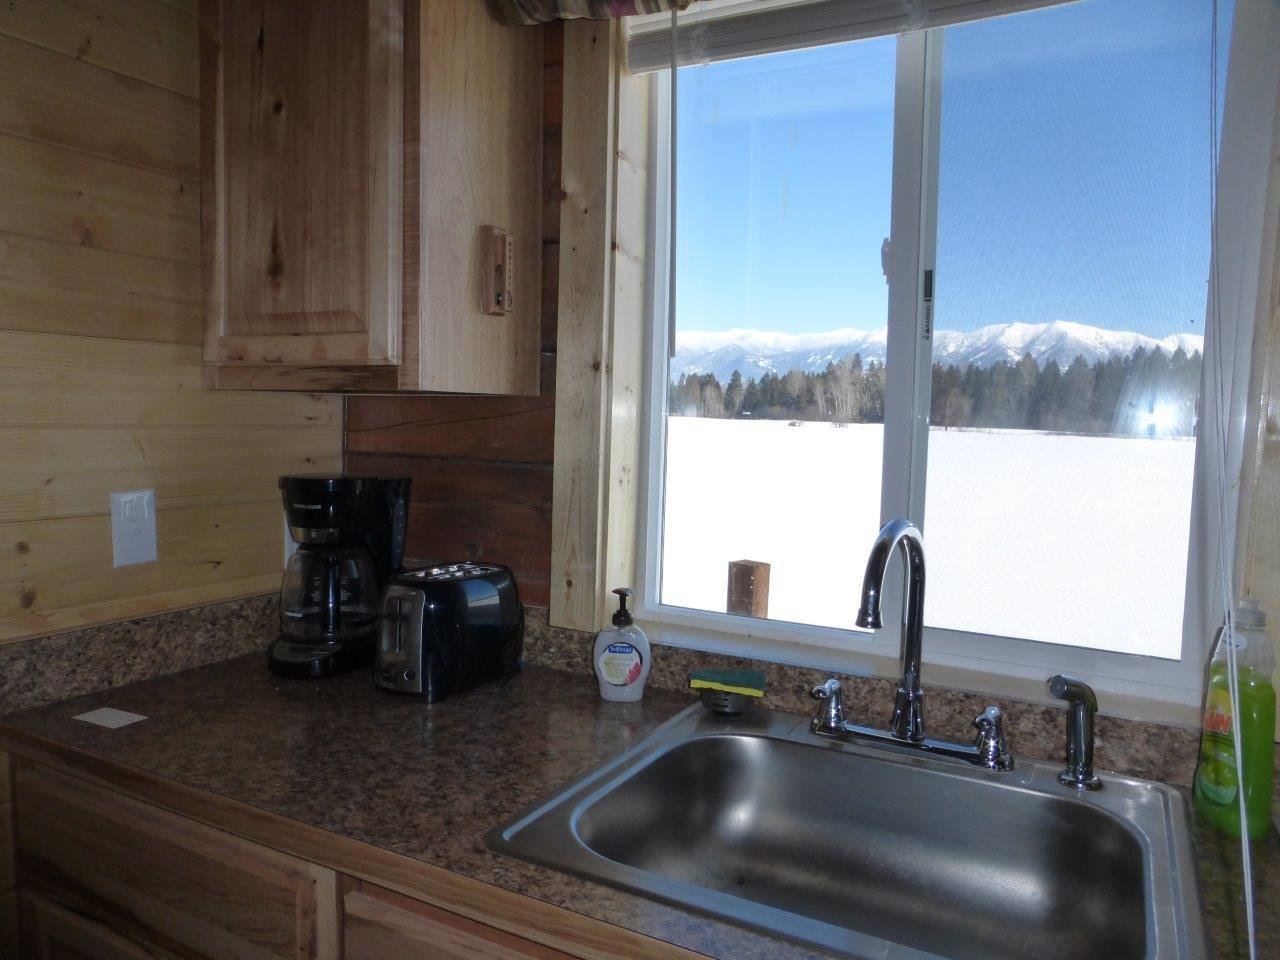 Sperry cabin kitchen overlooking mountains through window.